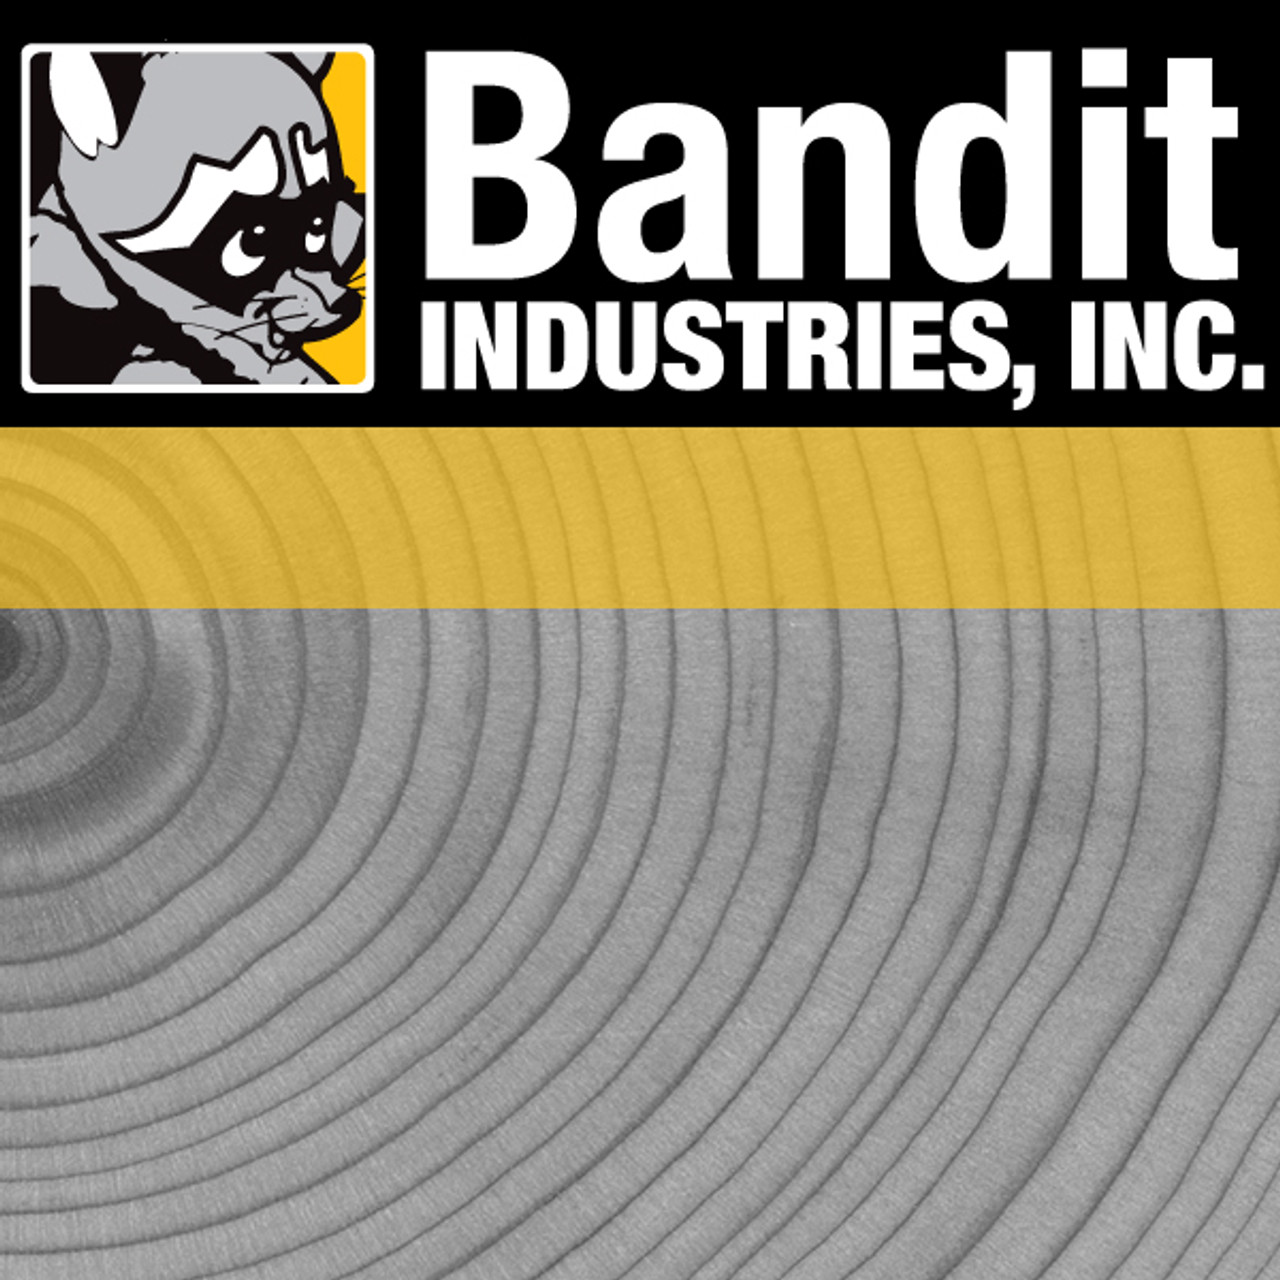 900-1928-29 : BANDIT BEARING, 1-7/16"" TAPERED ROLLER F4B-E-107R